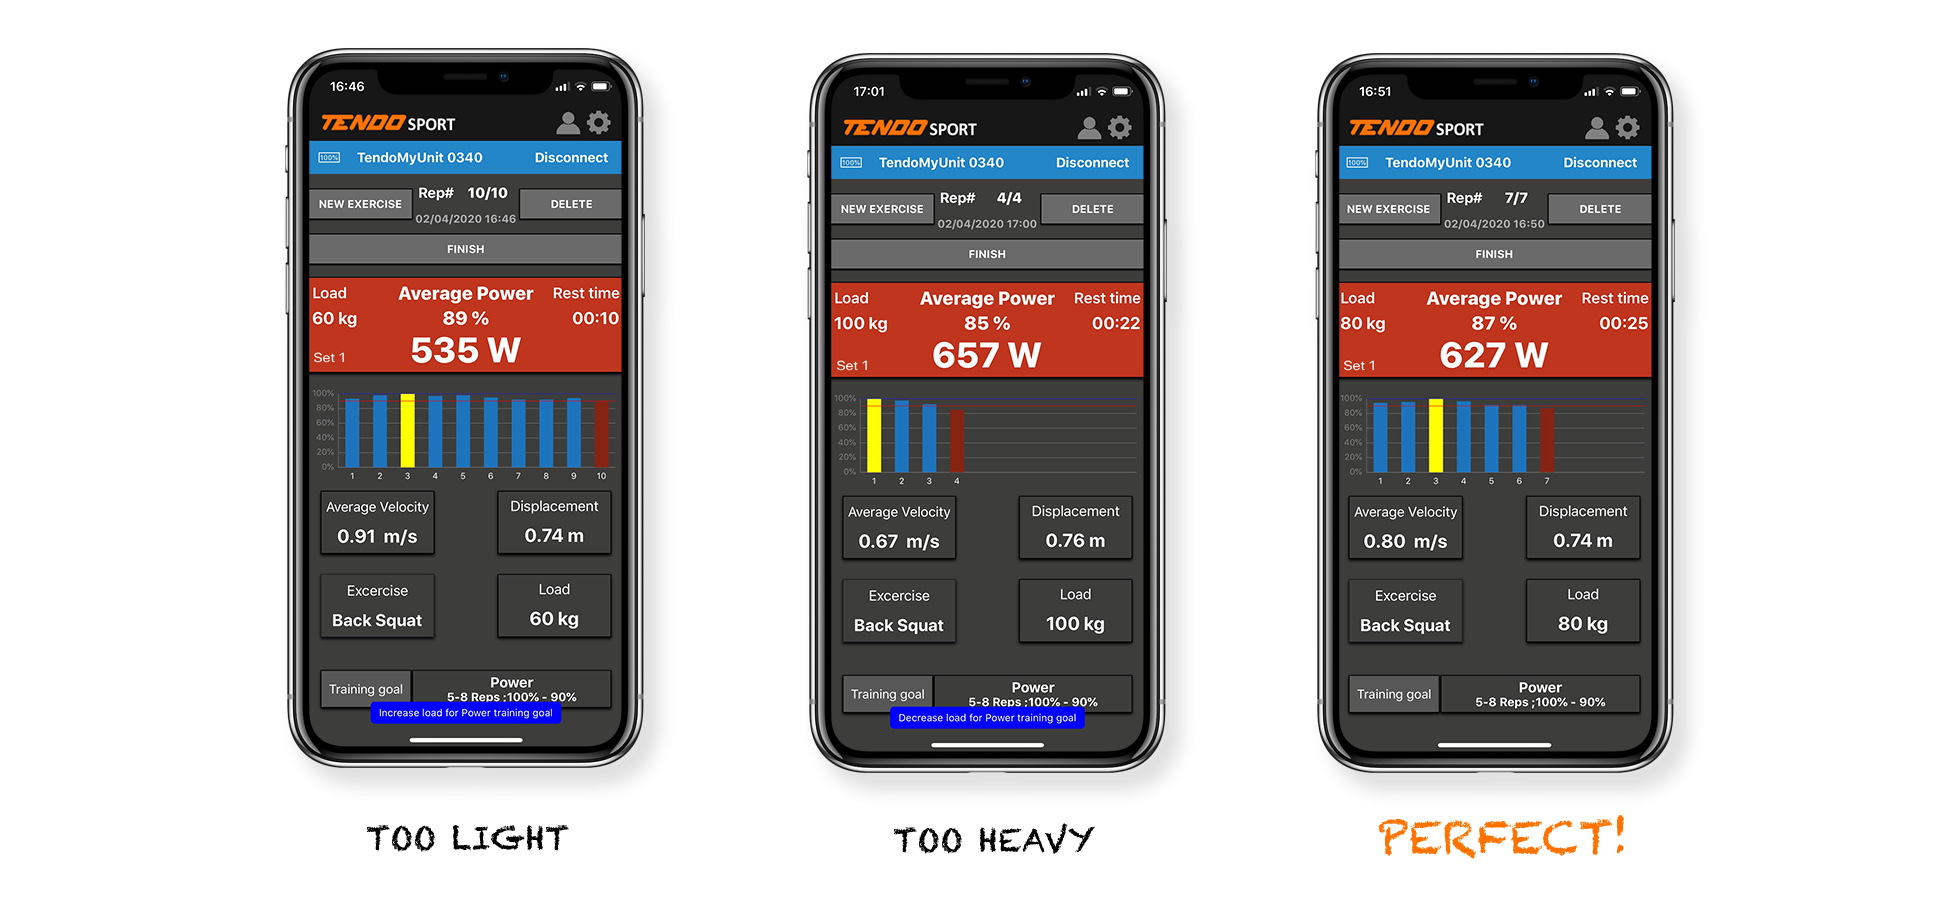 Tendo MyUnit weightlifting tracker app autoregulation of training load based on selected training goal